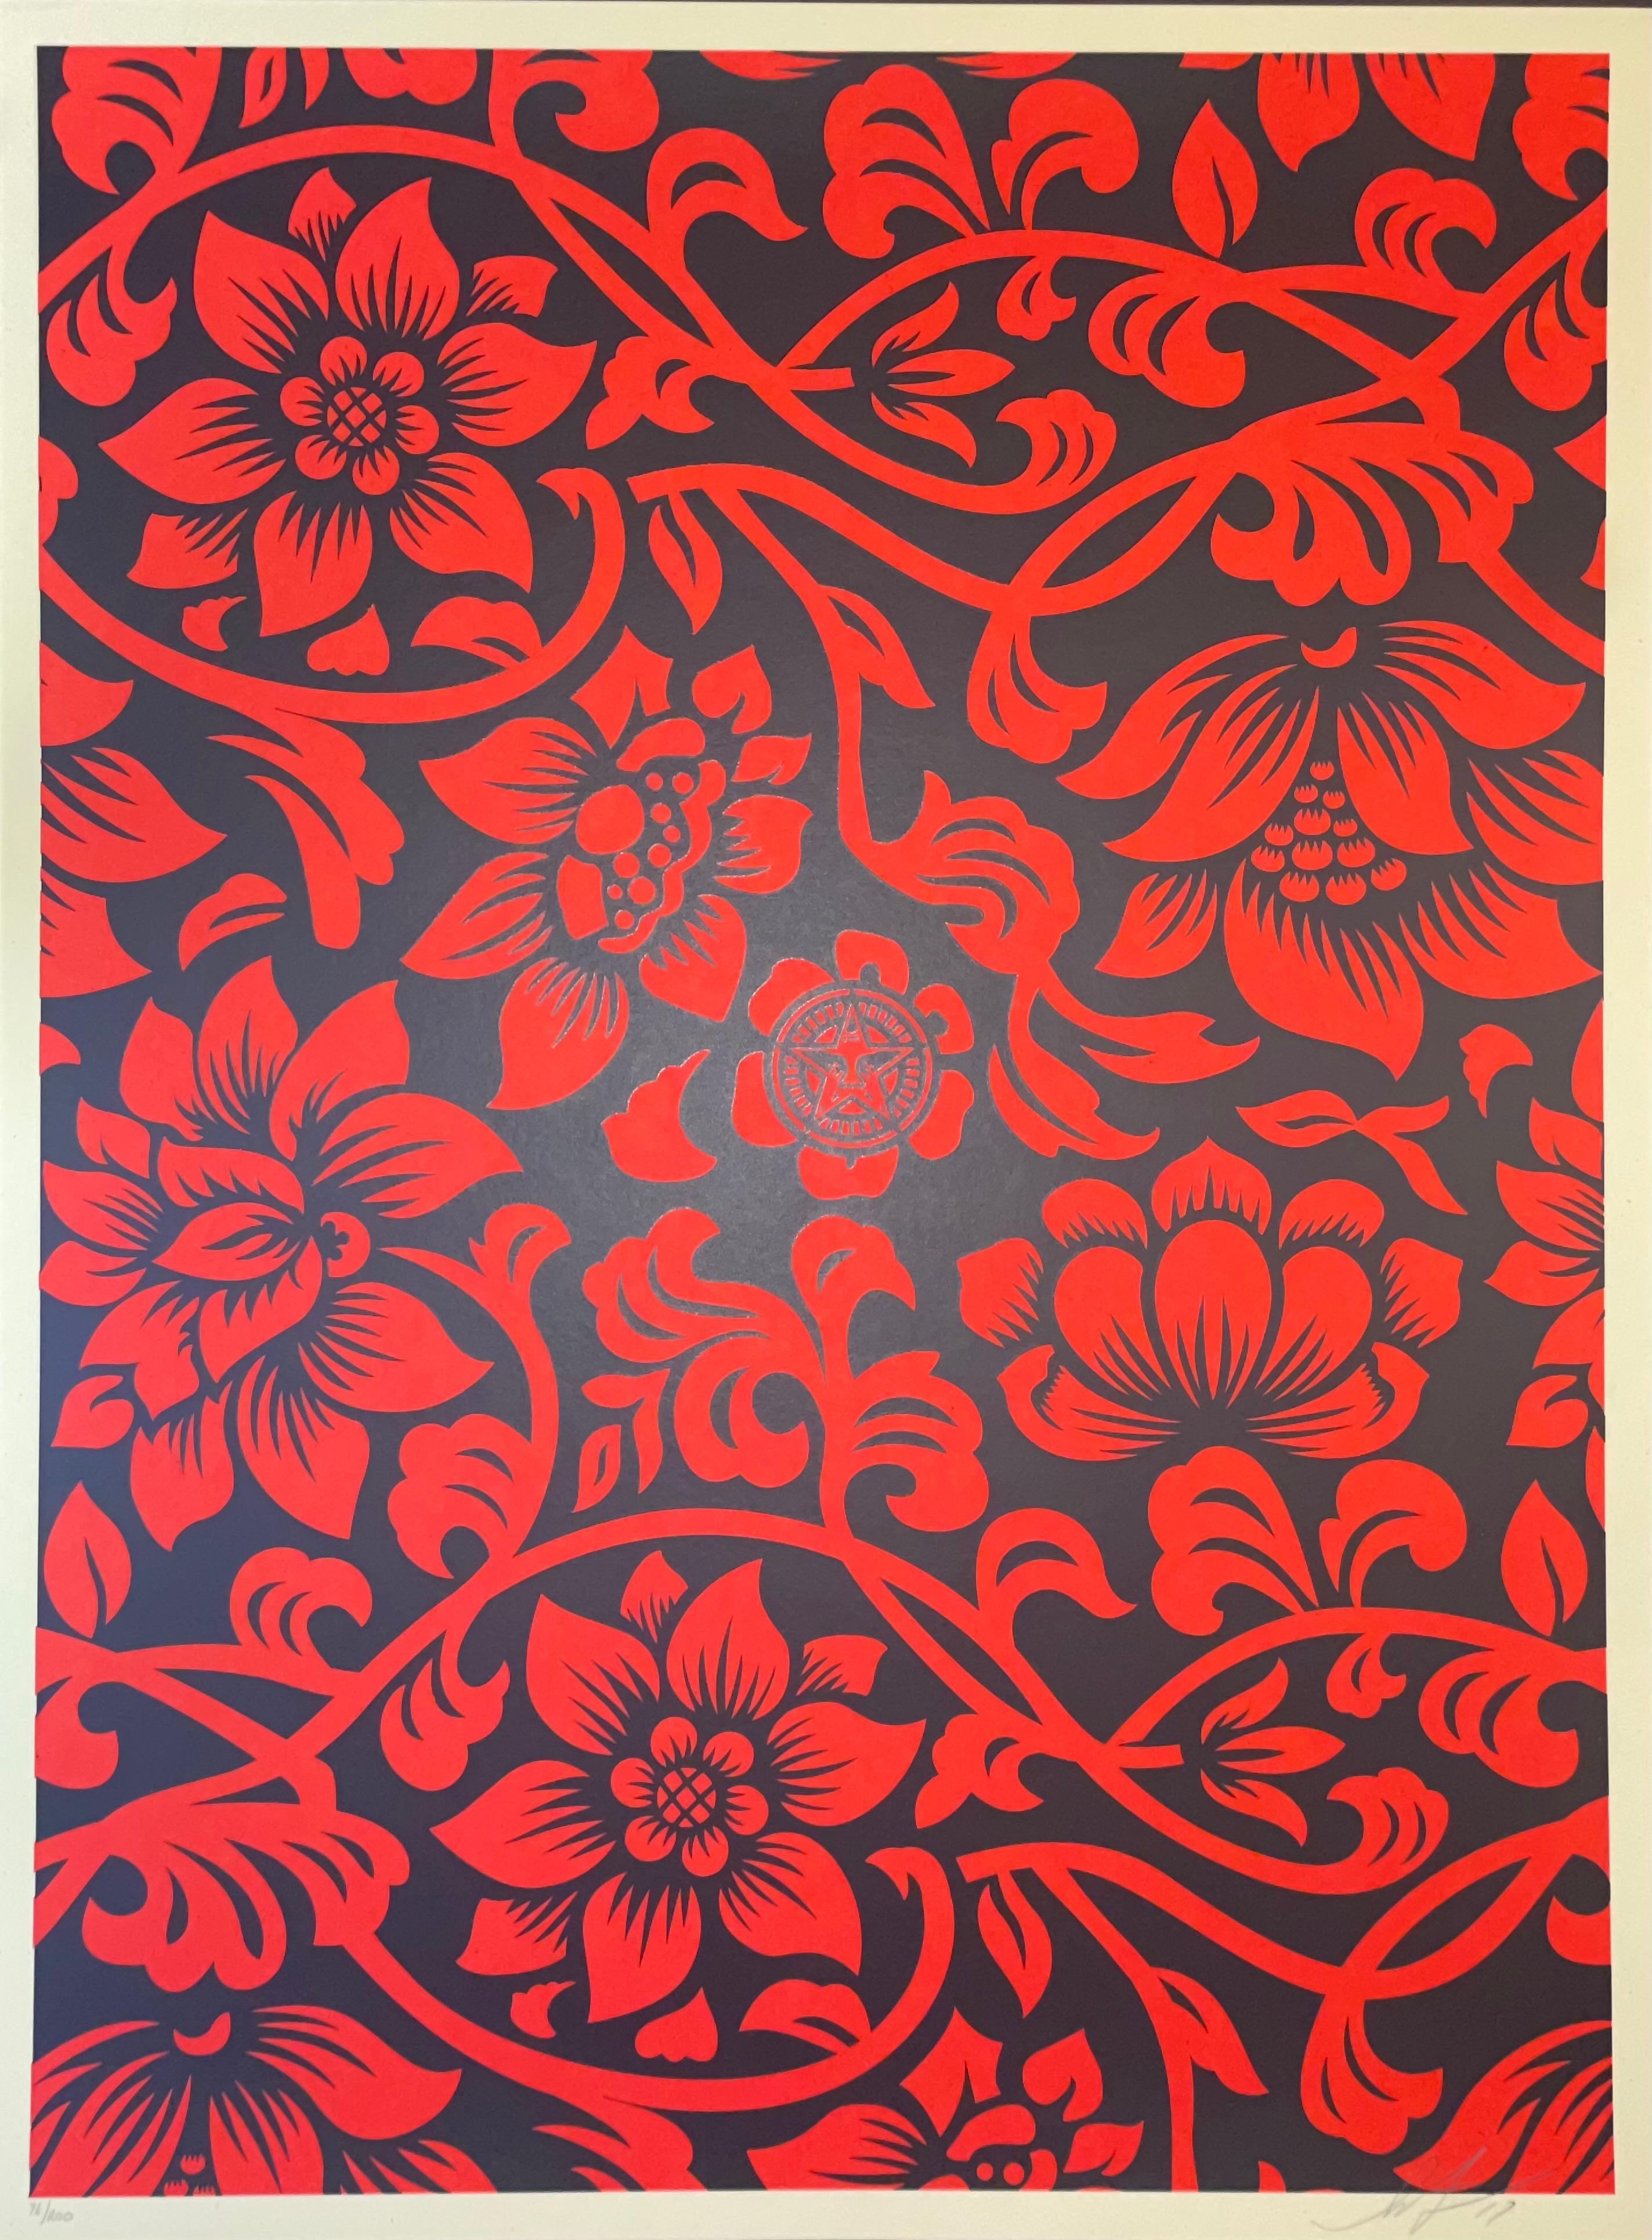 Shepard Fairey Fine Art Silkscreen Print "Floral Takeover" Red & Black Urban Art